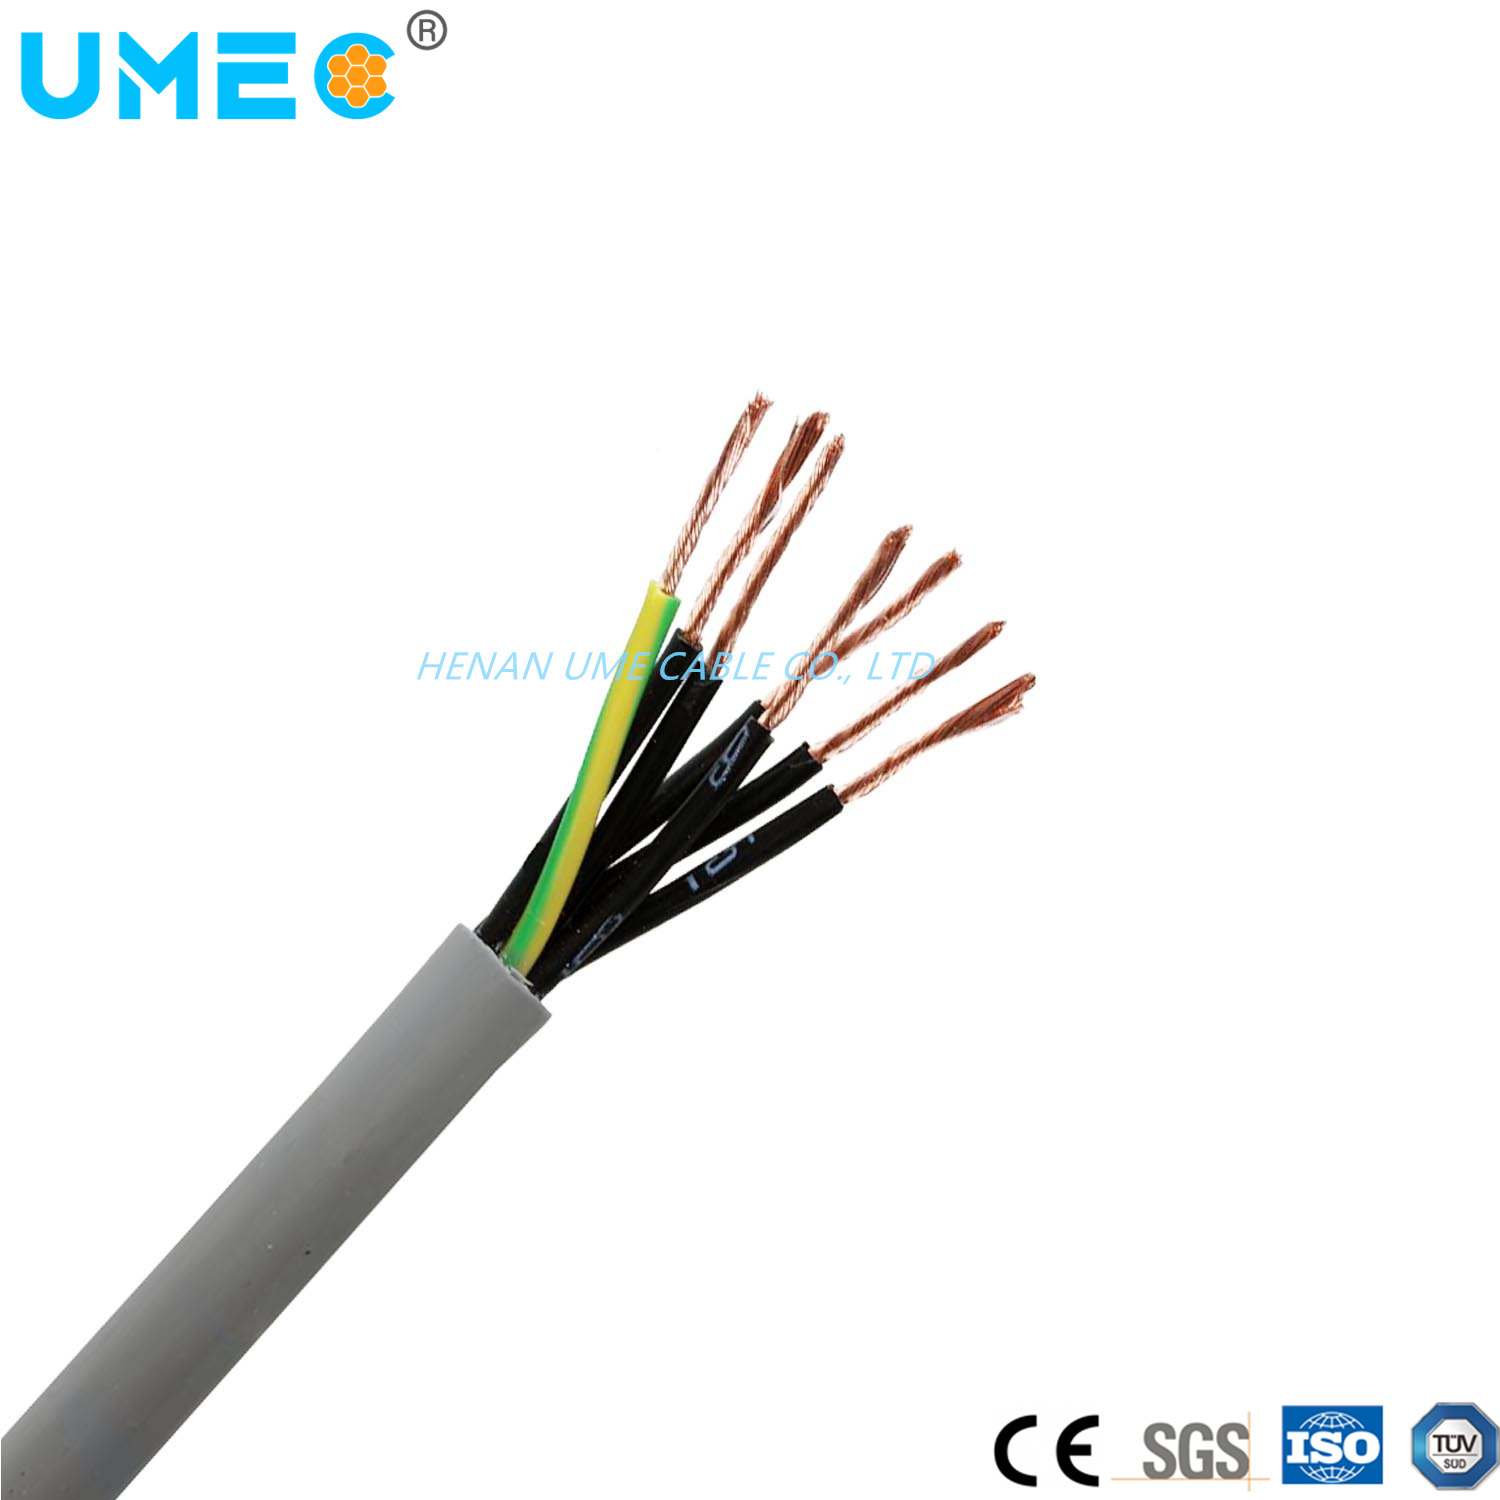 450/750V Copper Conductor PVC Insulated Sheath Control Cable